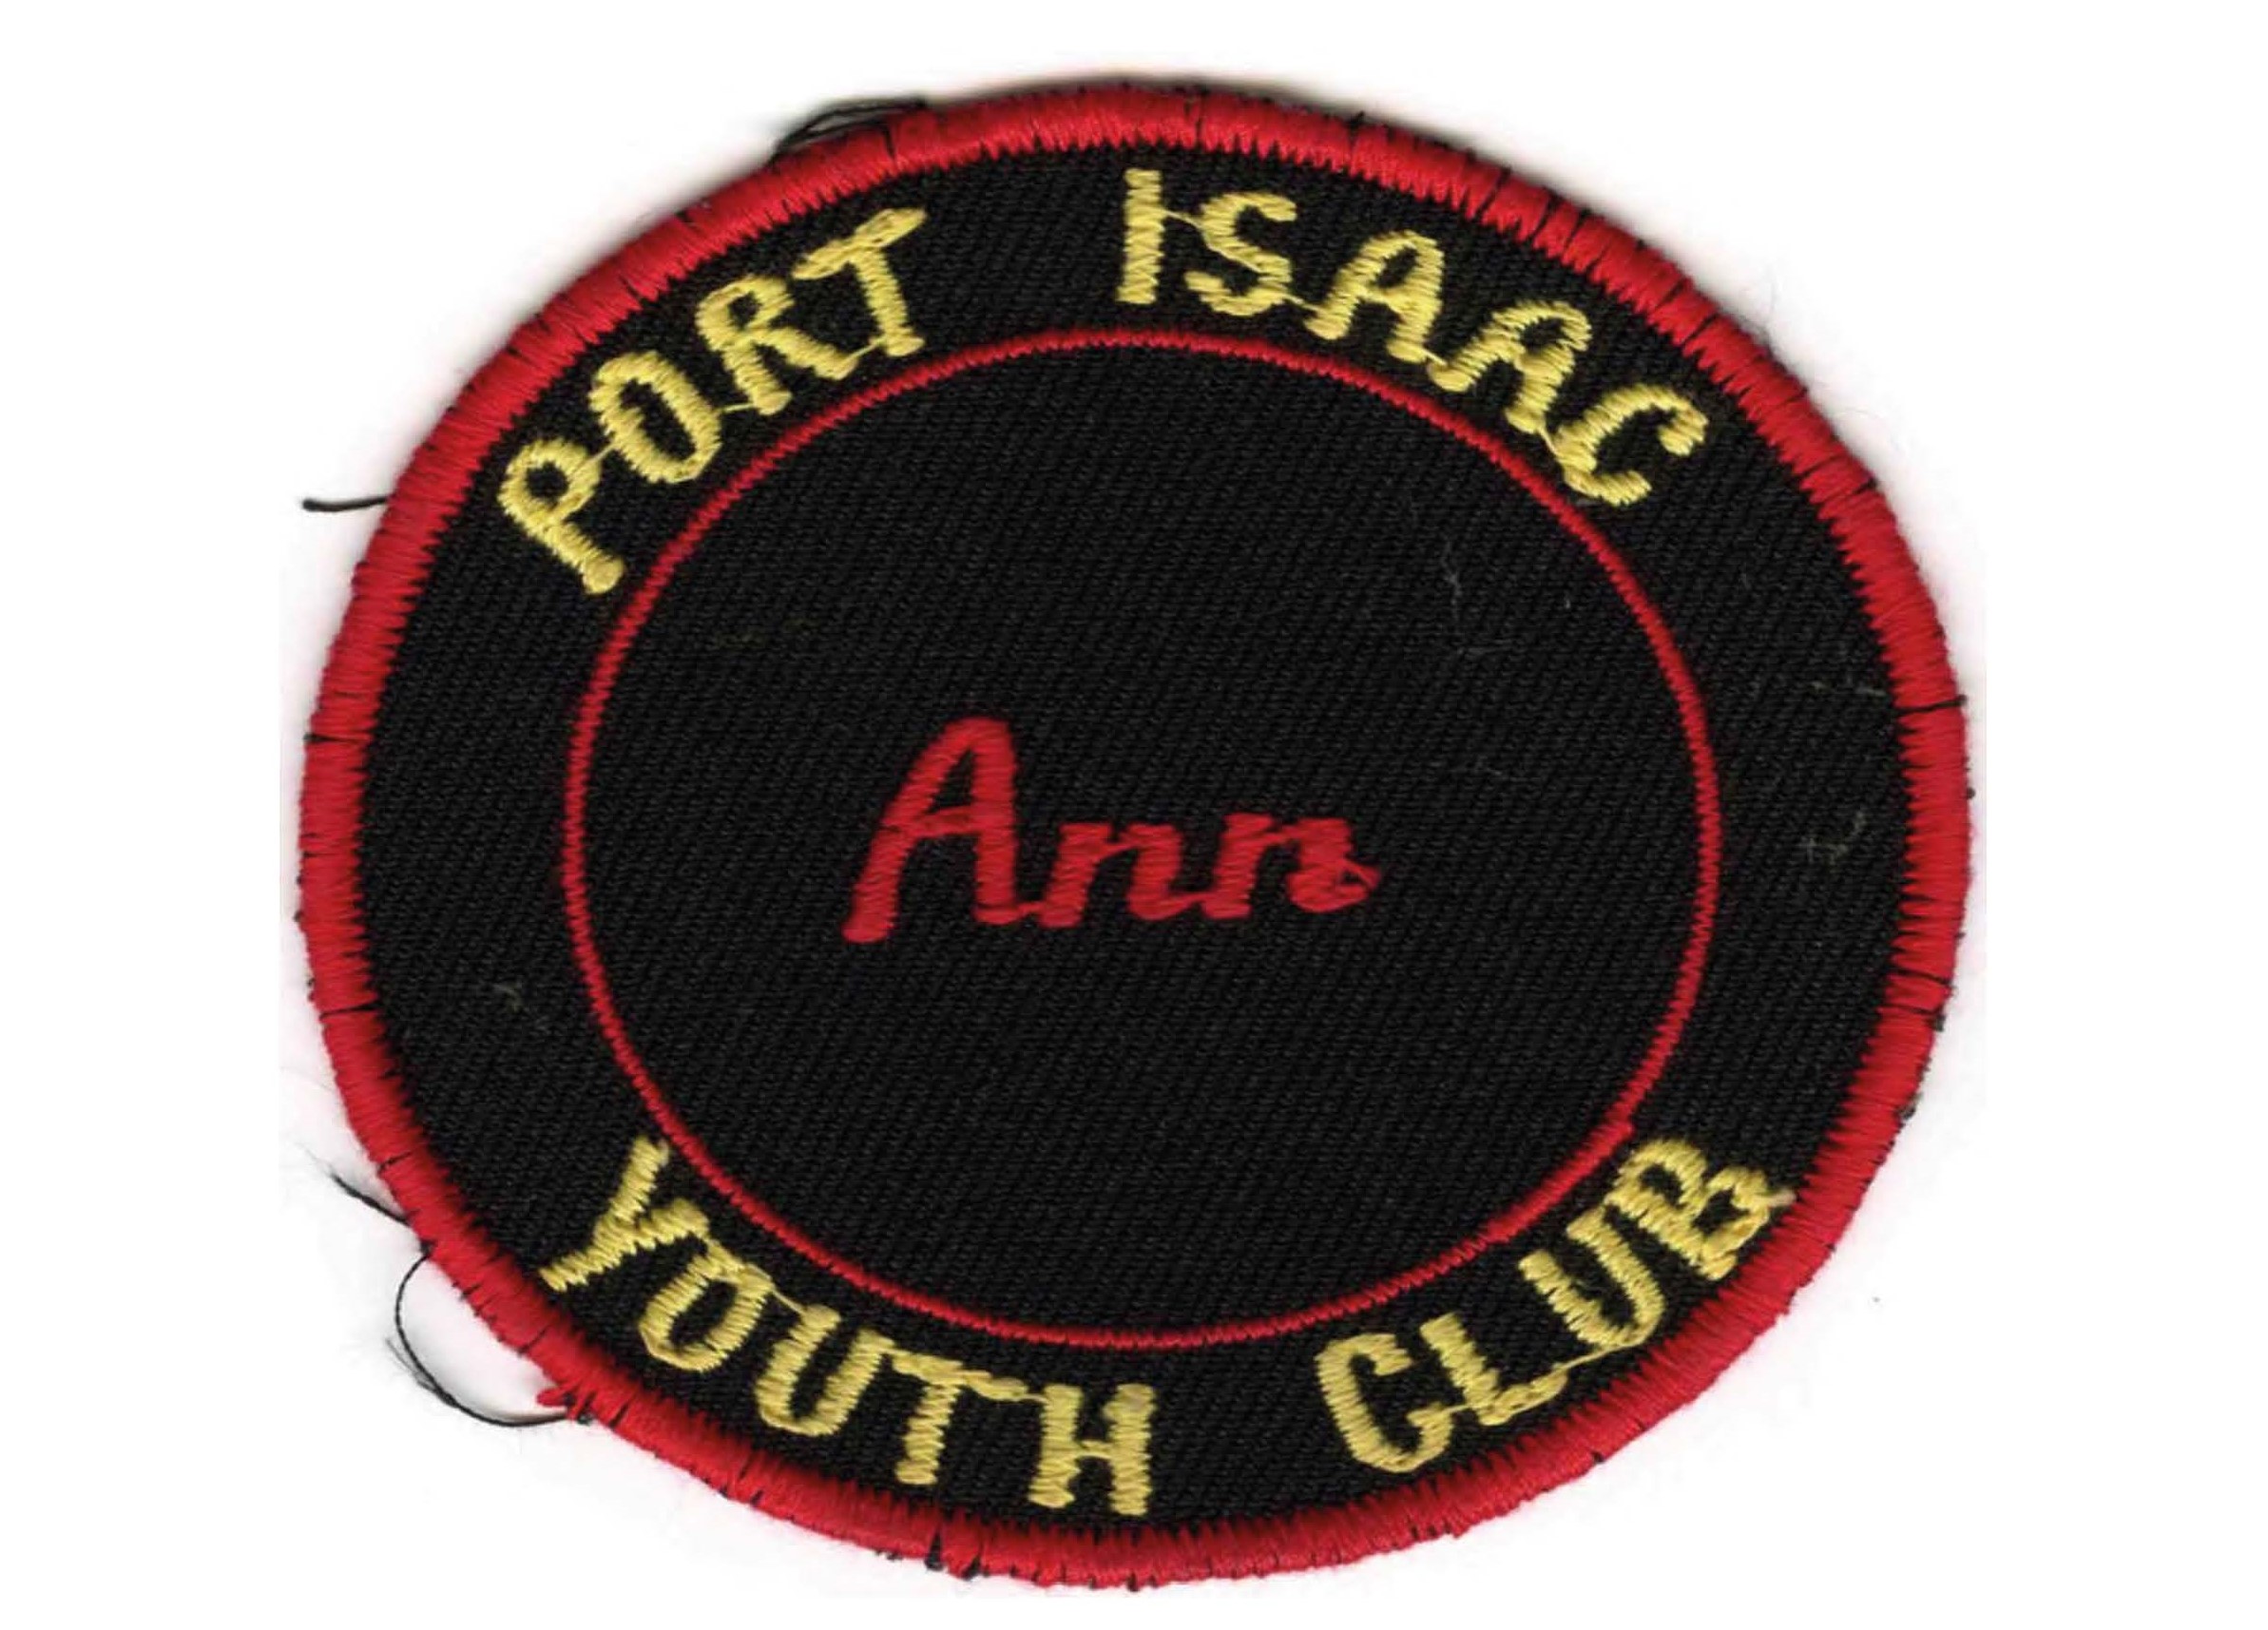 Port Isaac Youth Club, 1979-84